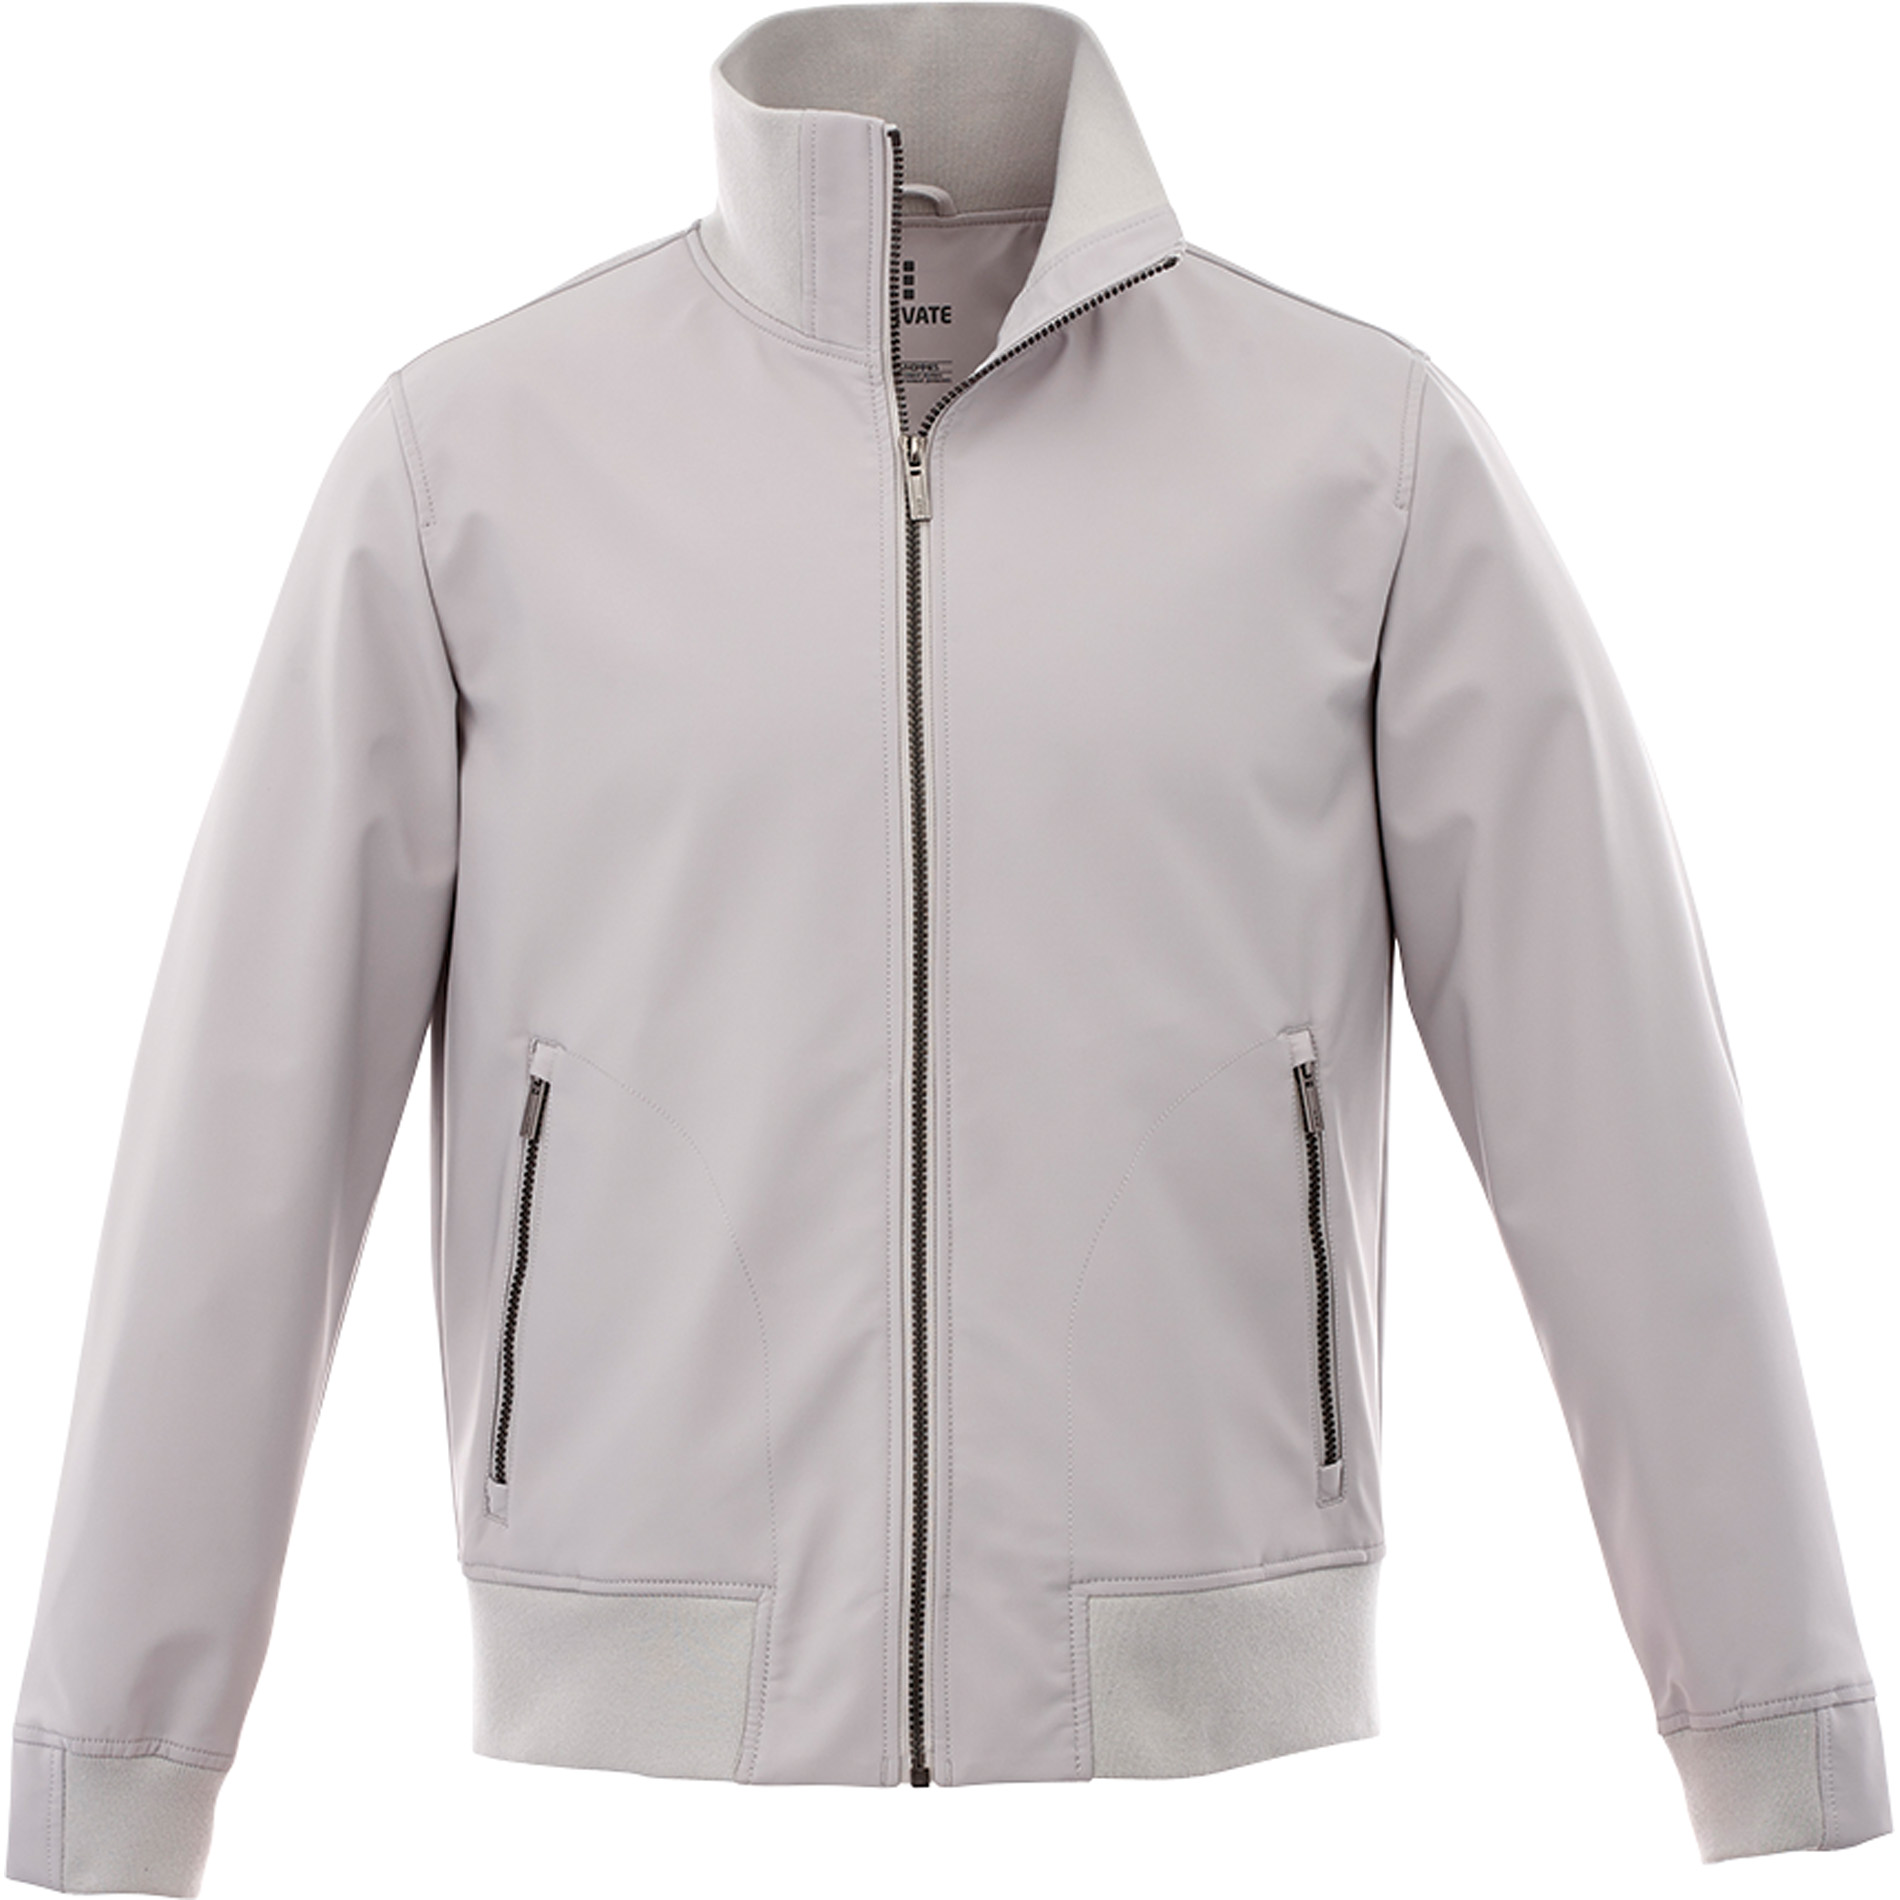 Trimark TM12935 - Men's KENDRICK Softshell Jacket